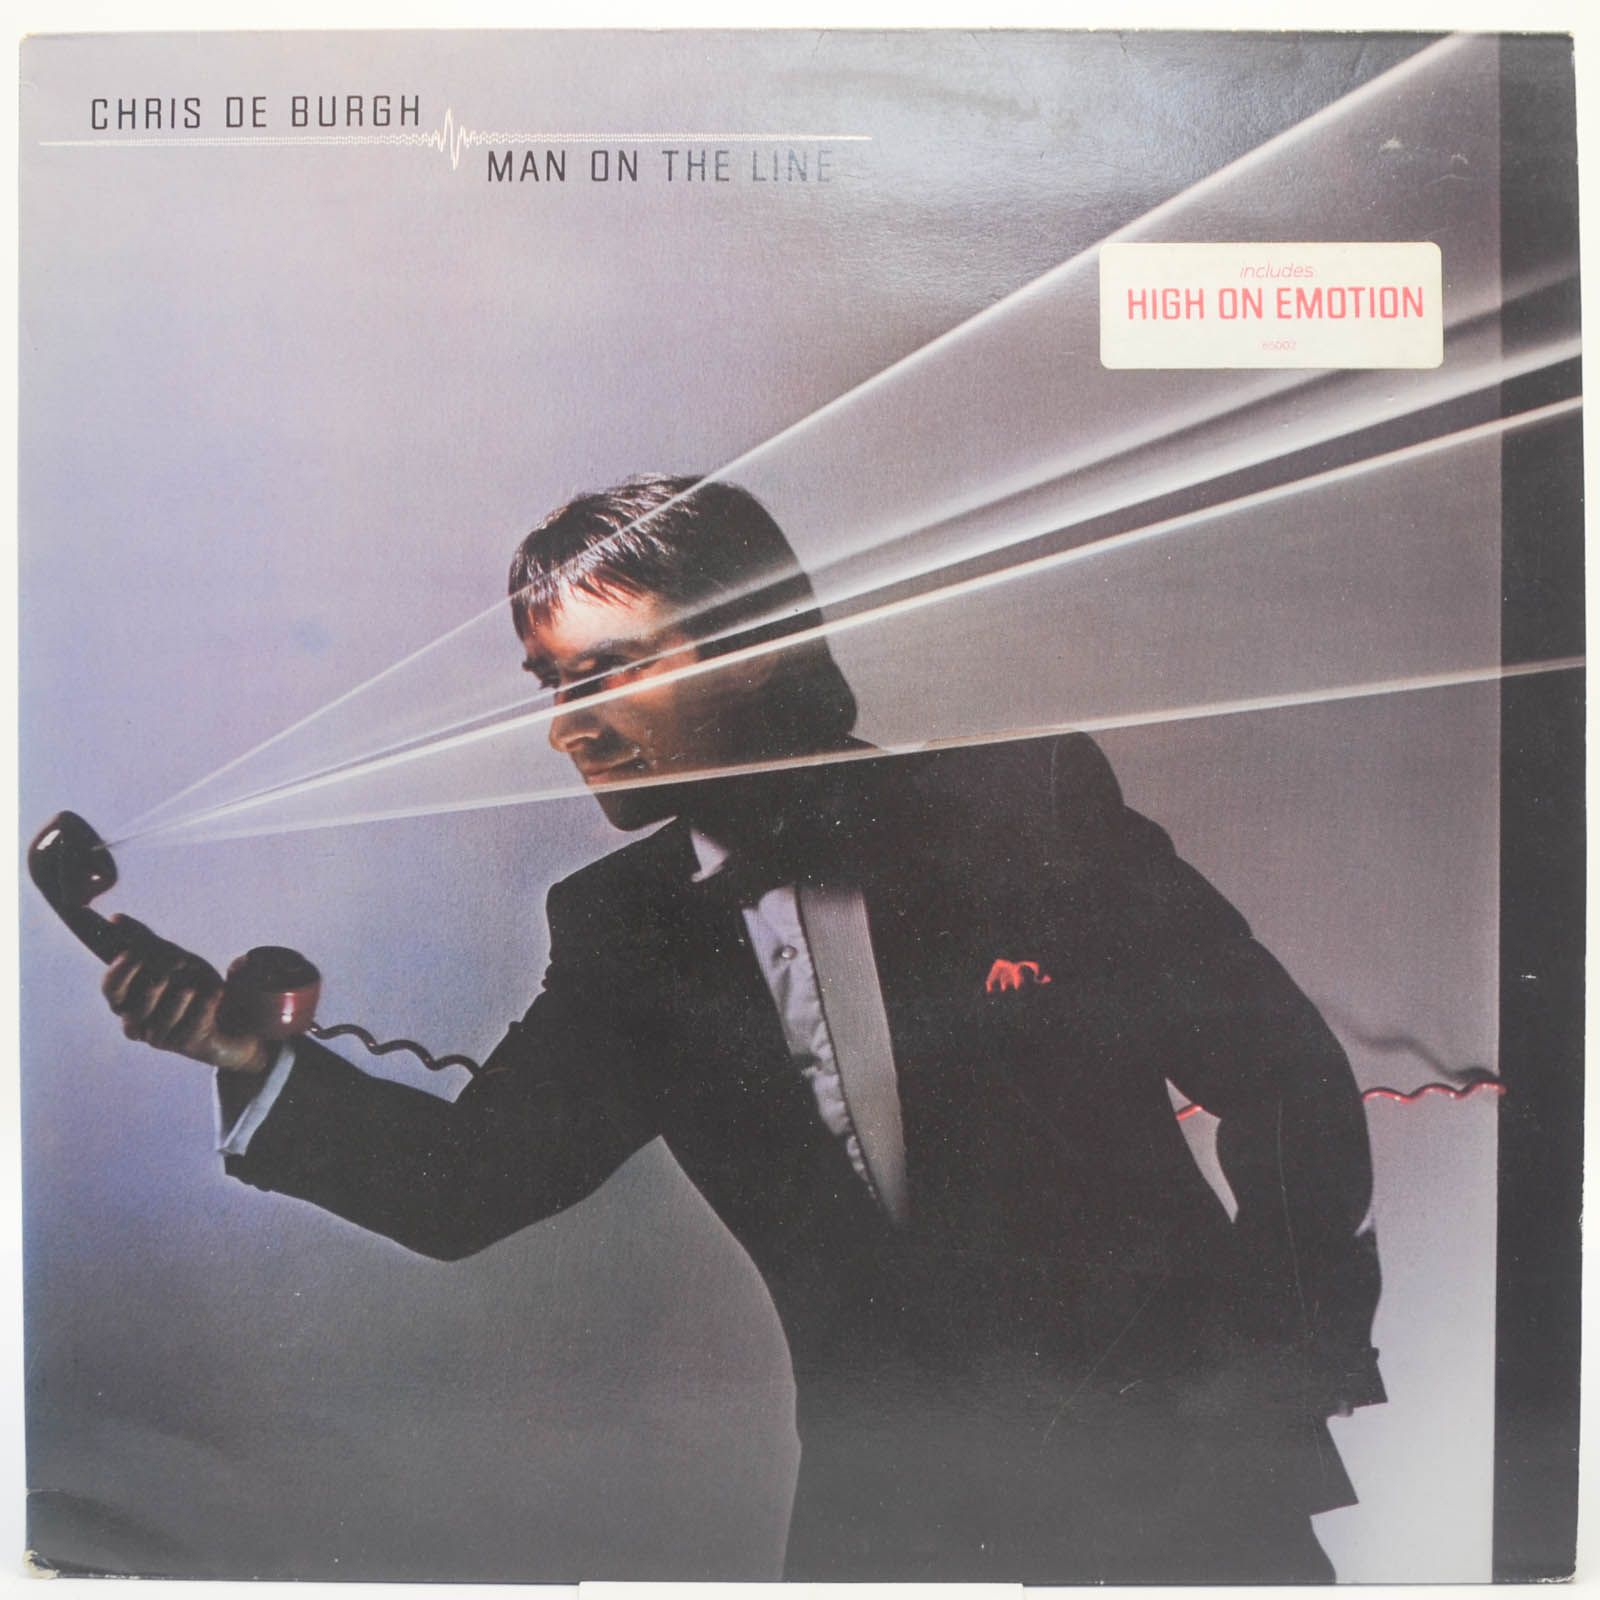 Chris de Burgh — Man On The Line, 1984